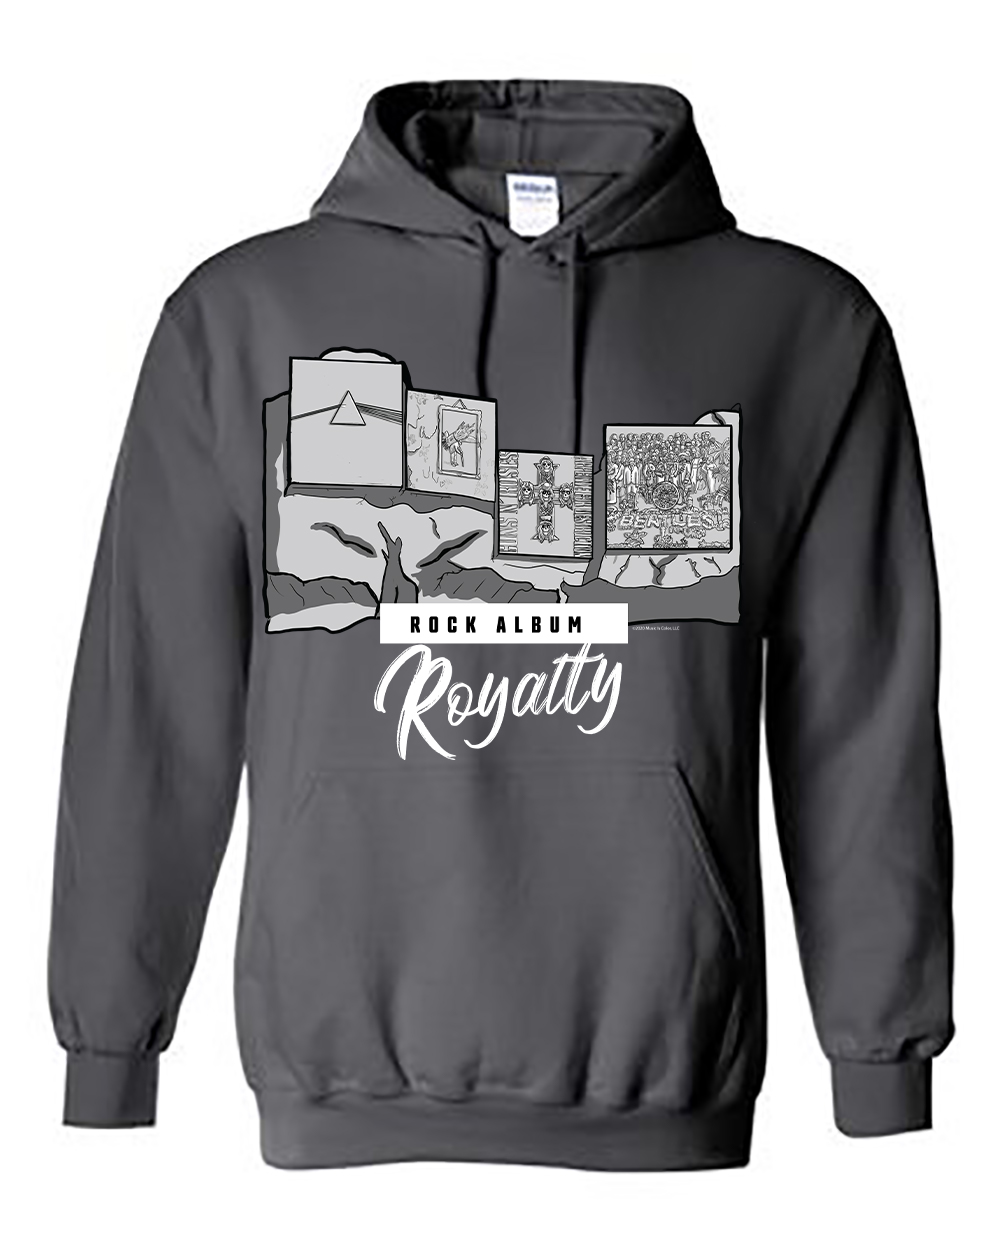 Mount Rushmore - Rock Album Royalty (Gray Heavy Duty Hoodie)